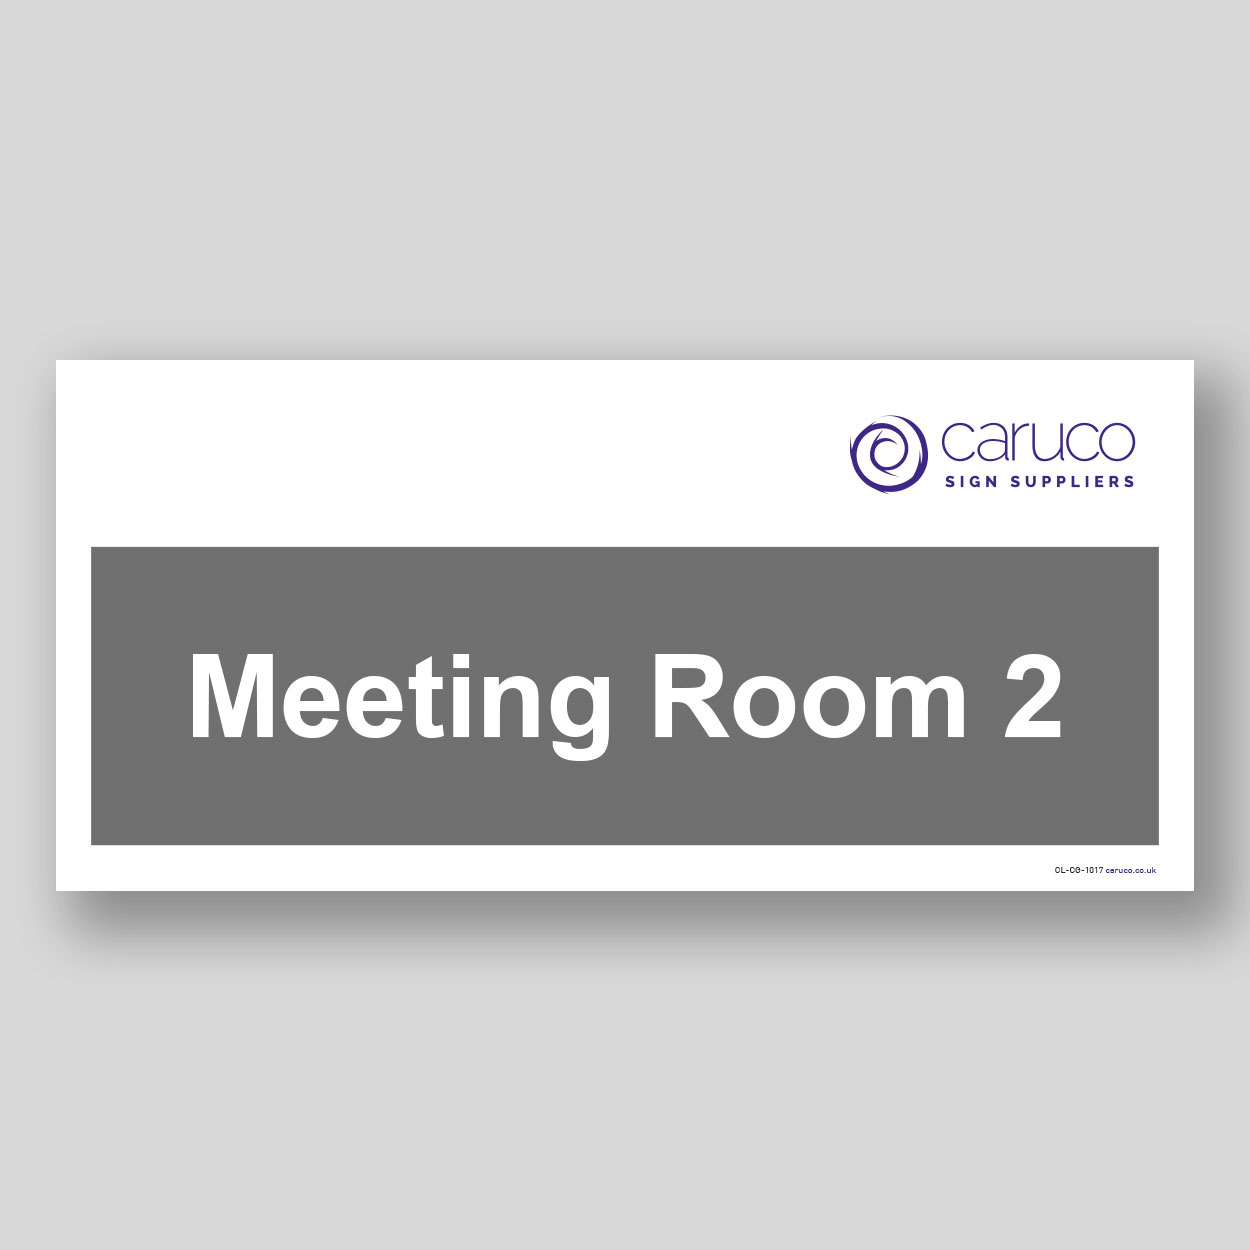 CL-CG-1017 Meeting Room 2